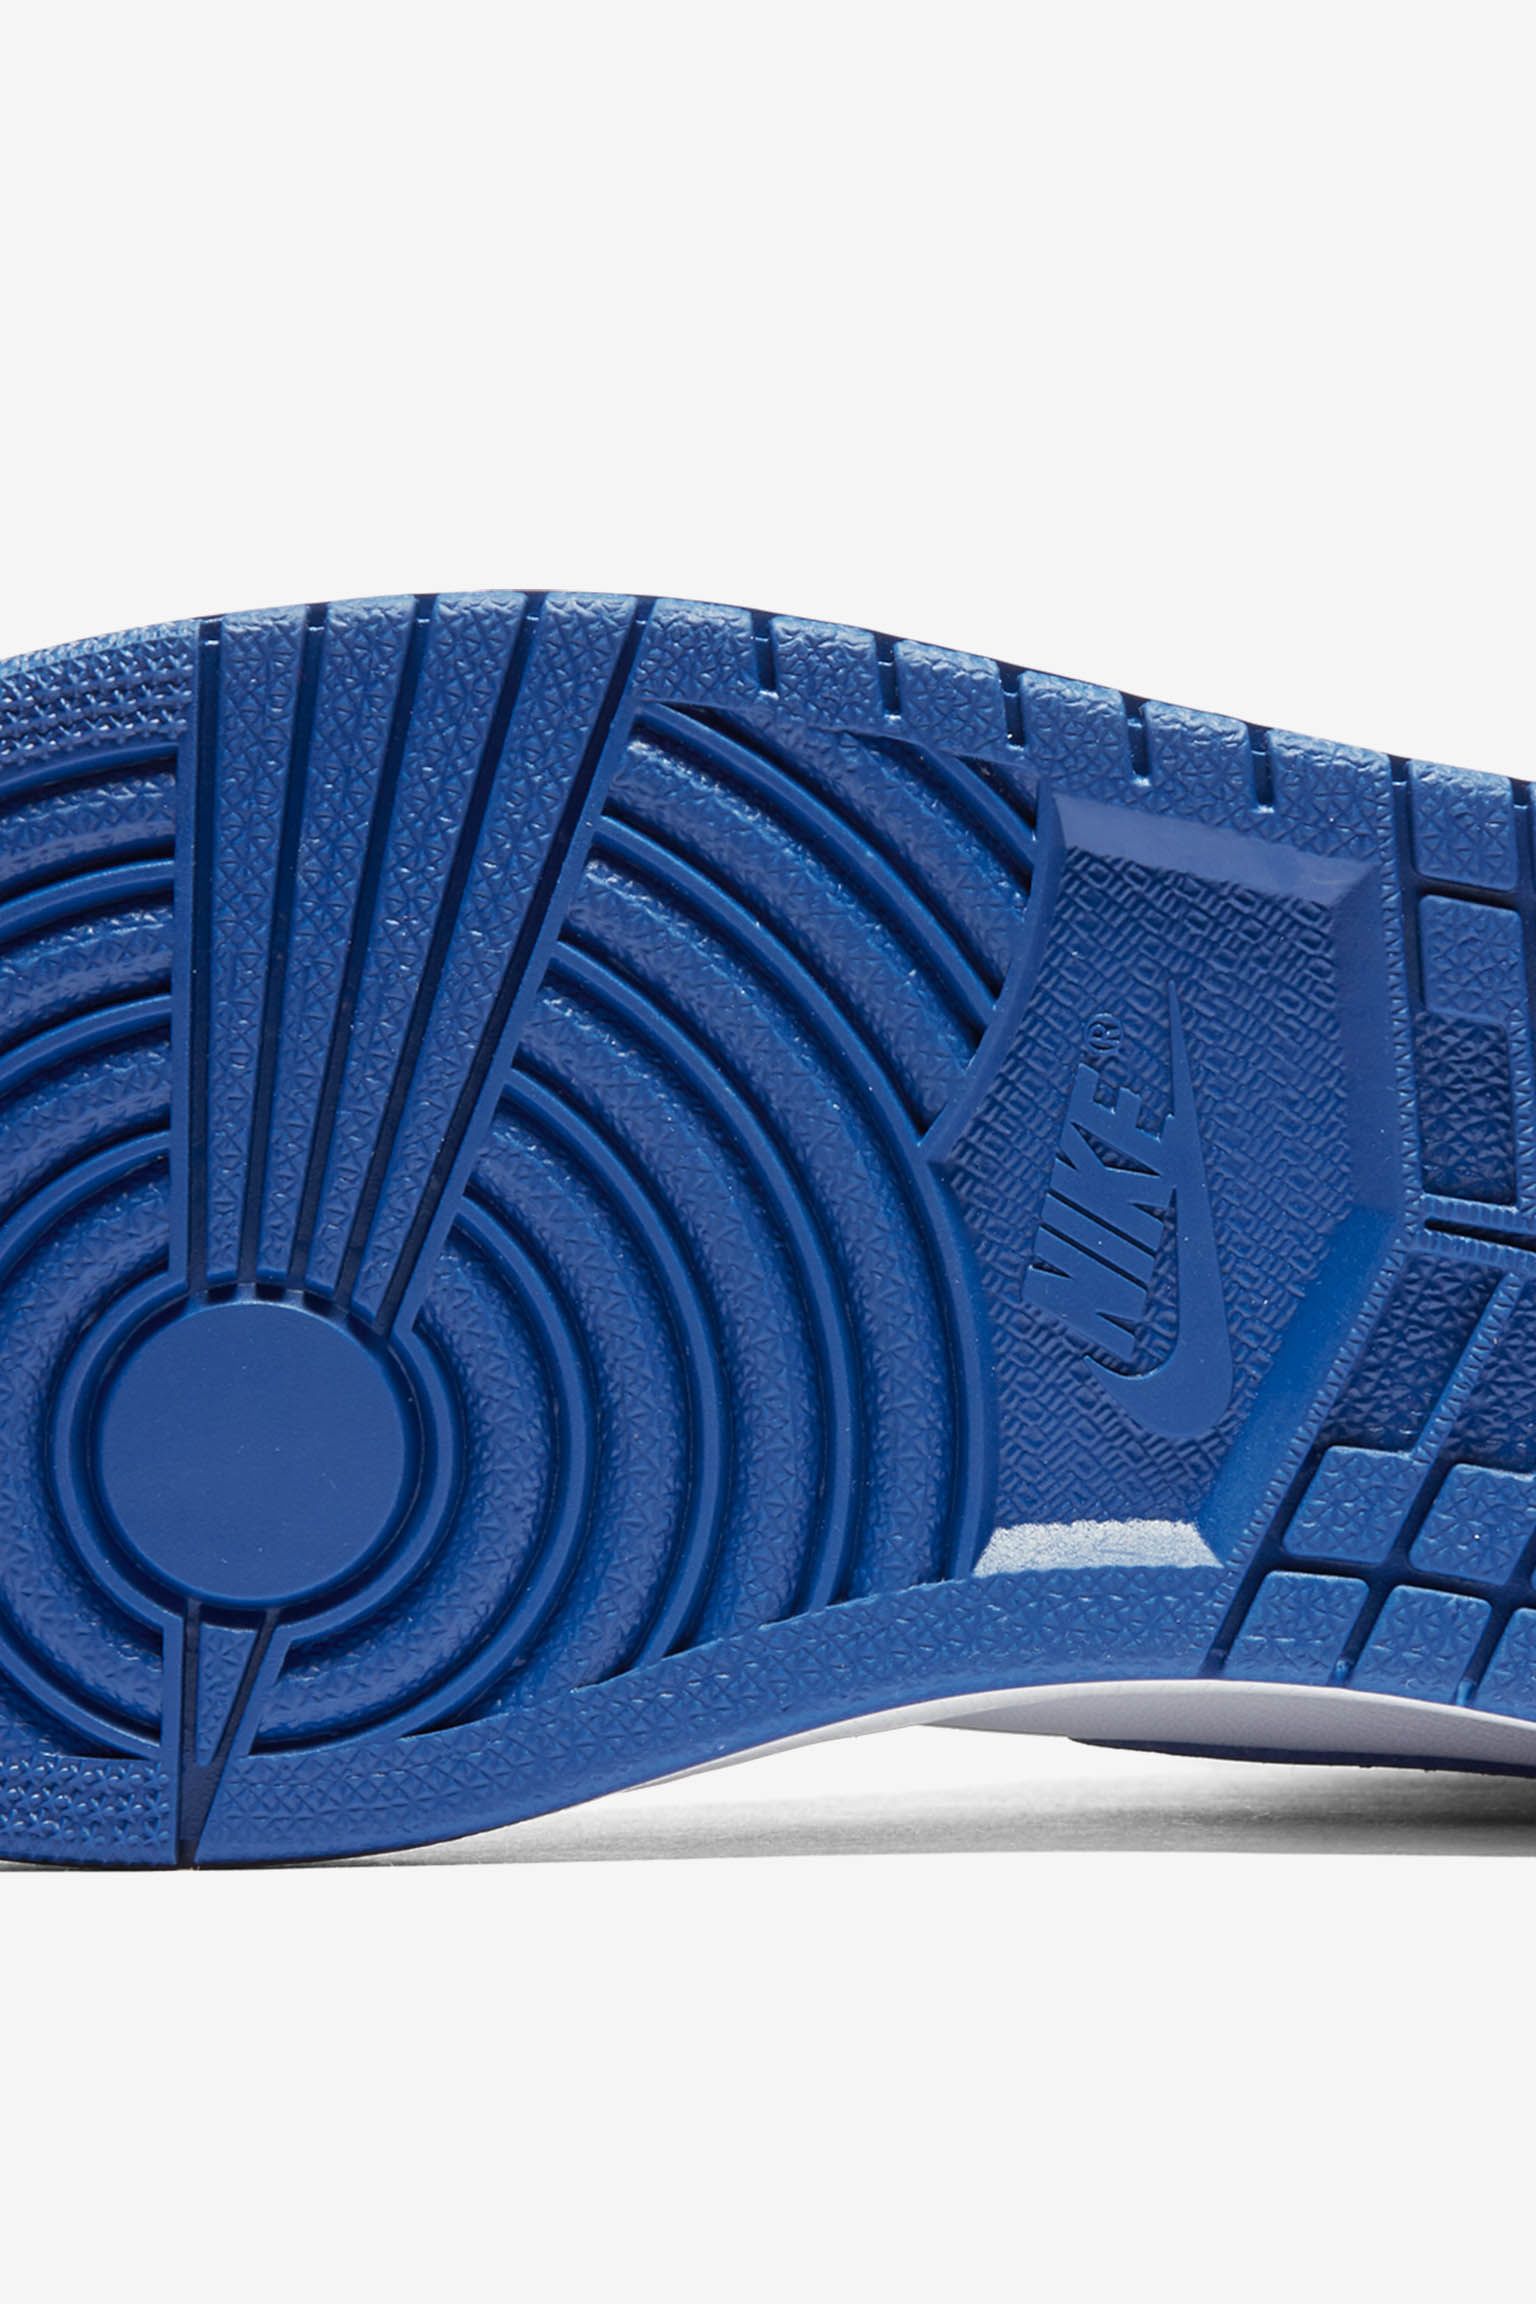 Air Jordan 1 Retro 'Storm Blue'. Nike SNKRS